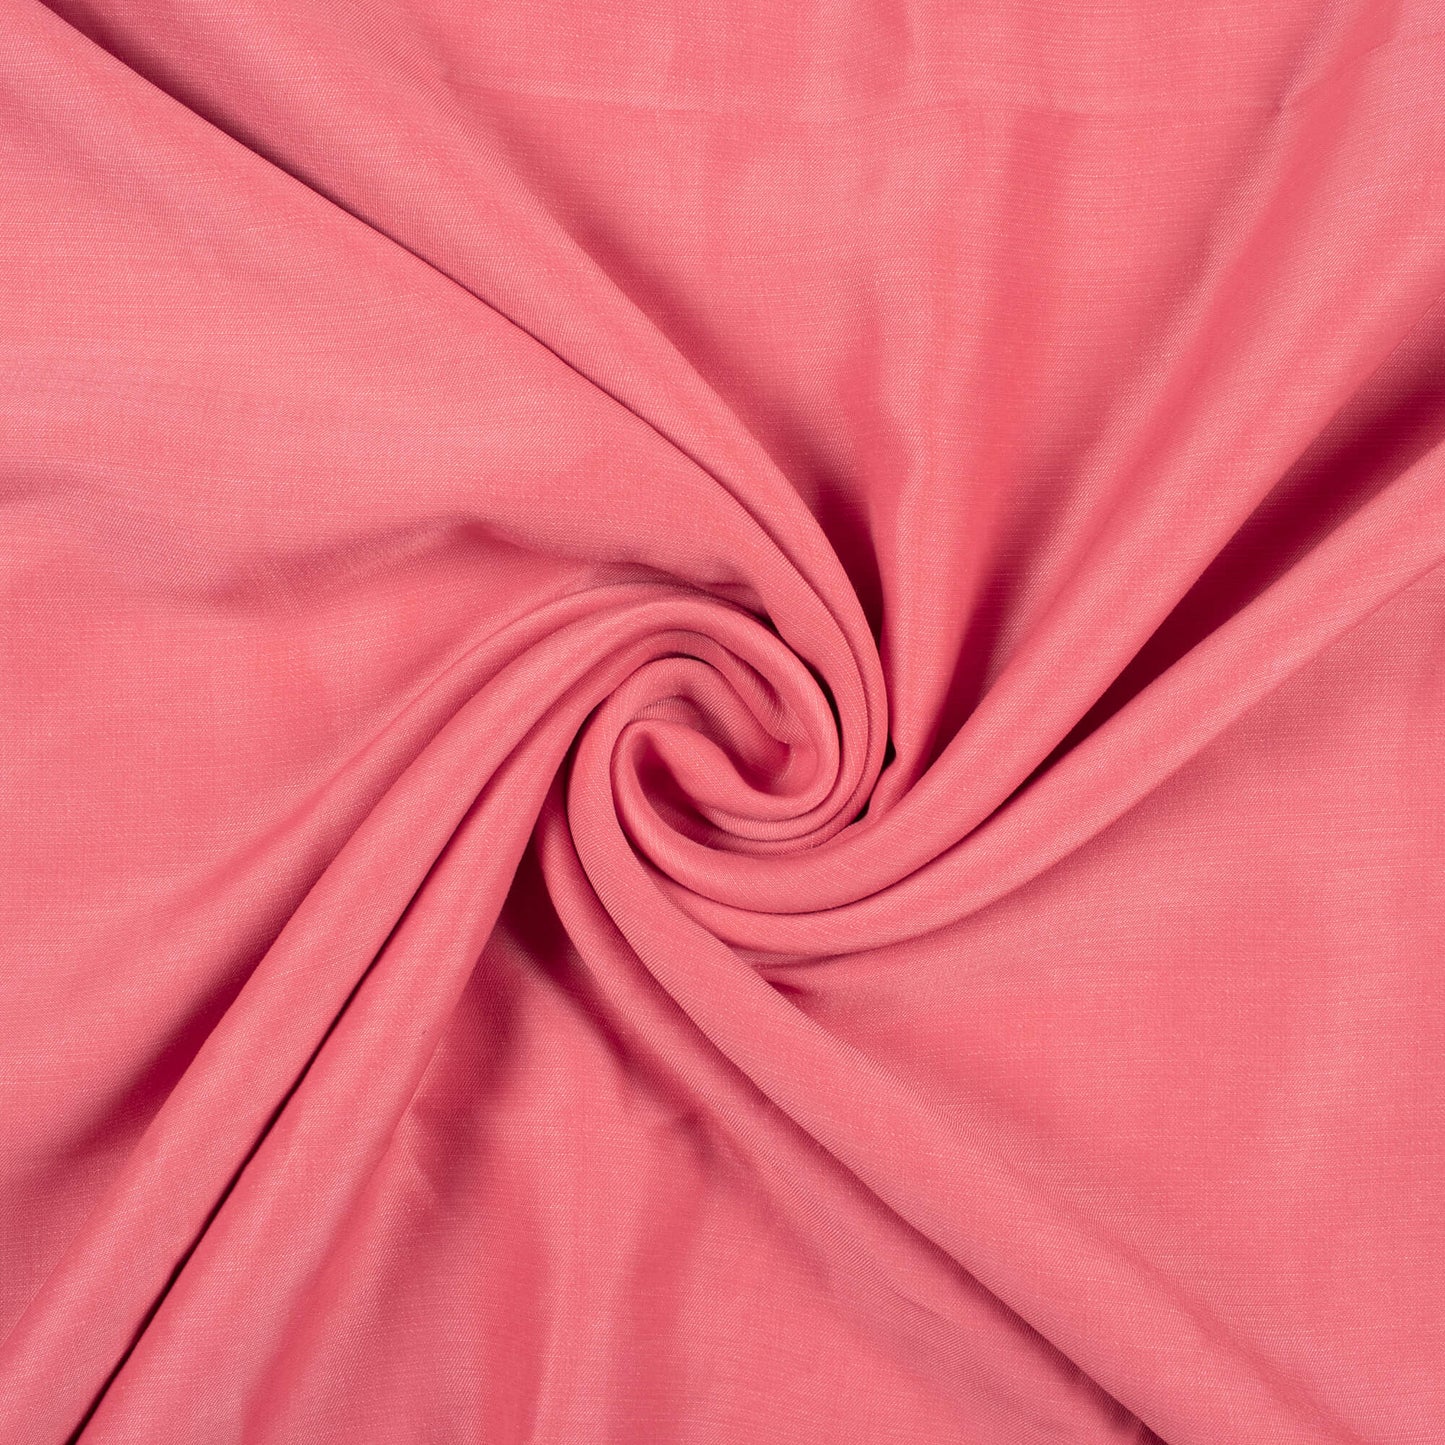 Watermelon Pink Plain Modal Satin Fabric